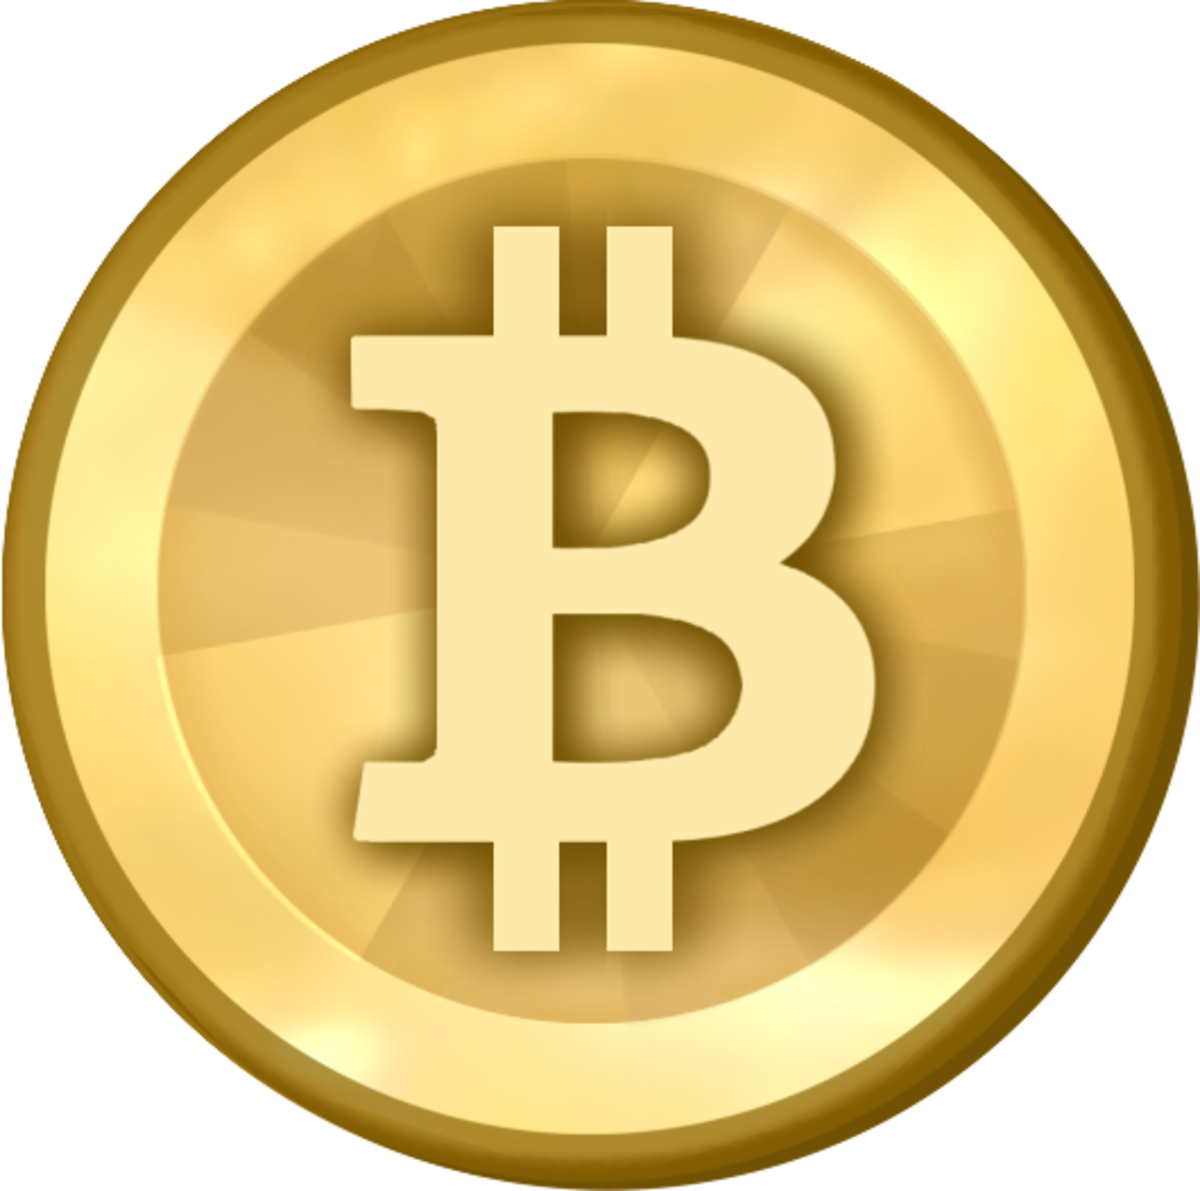 How to get rich through bitcoin